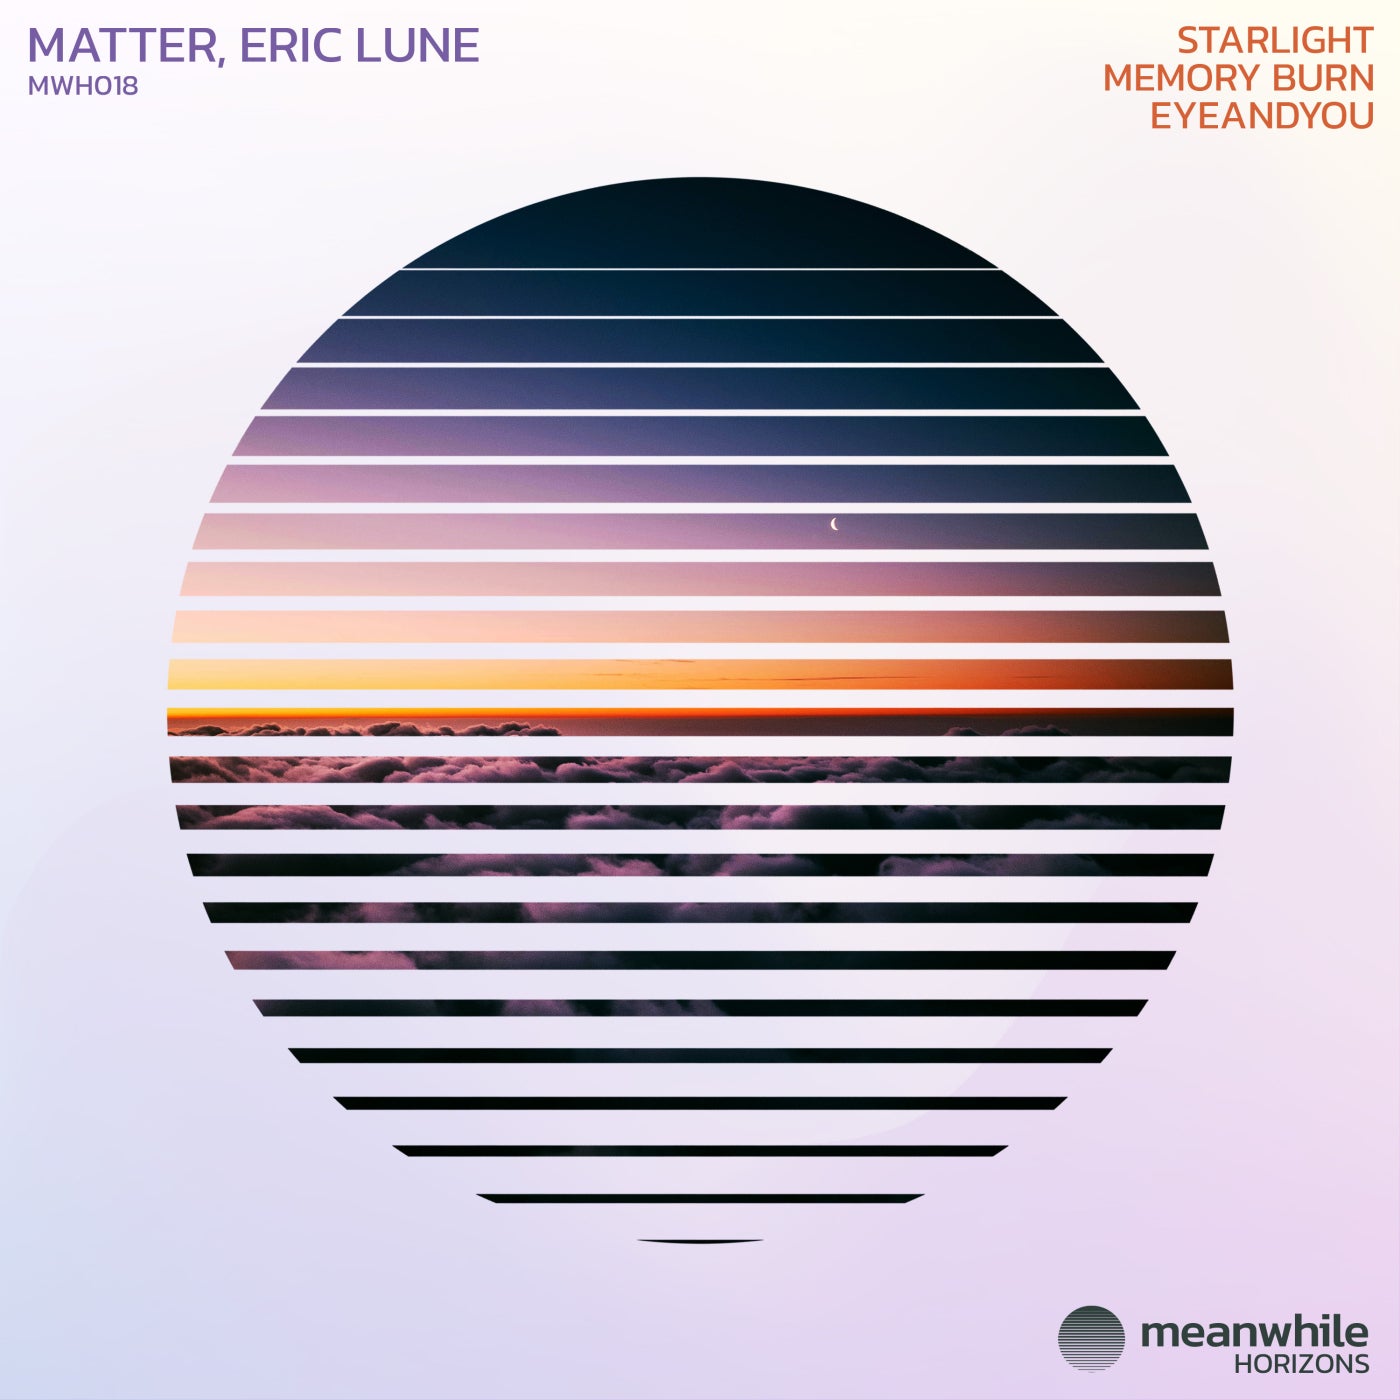 Cover - Matter, Eric Lune - EyeAndYou (Original Mix)